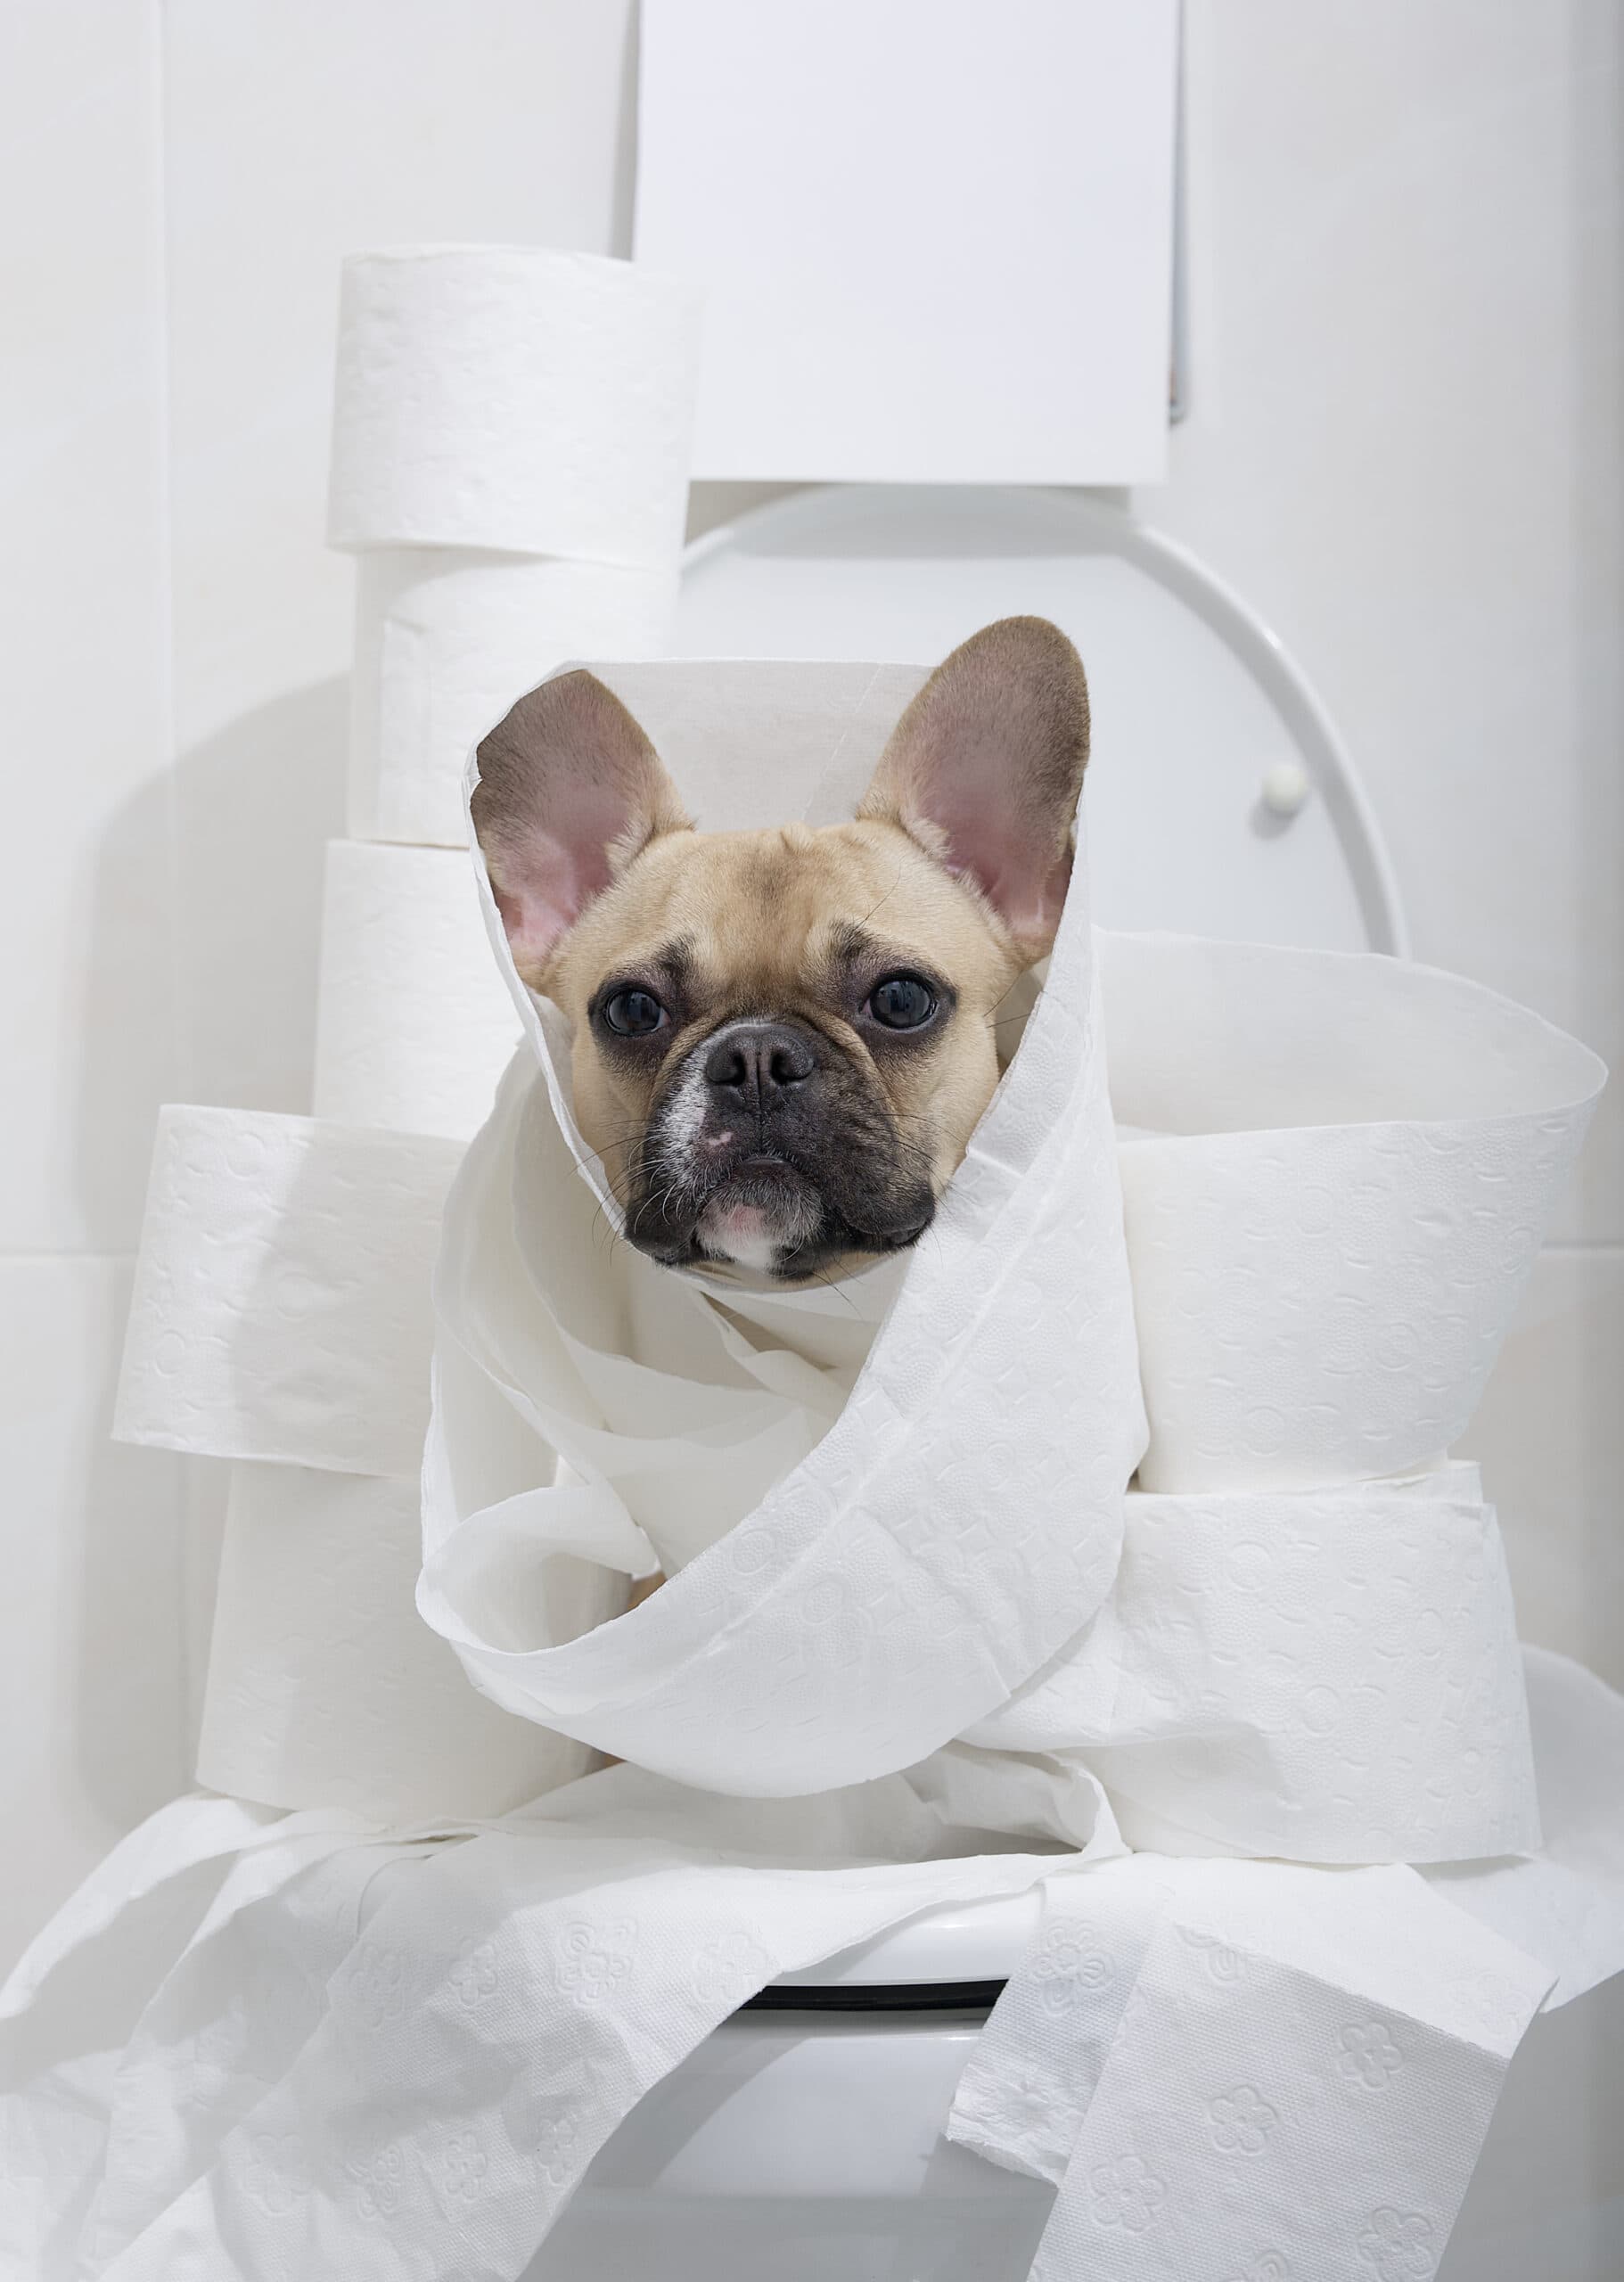 What causes dog diarrhea?